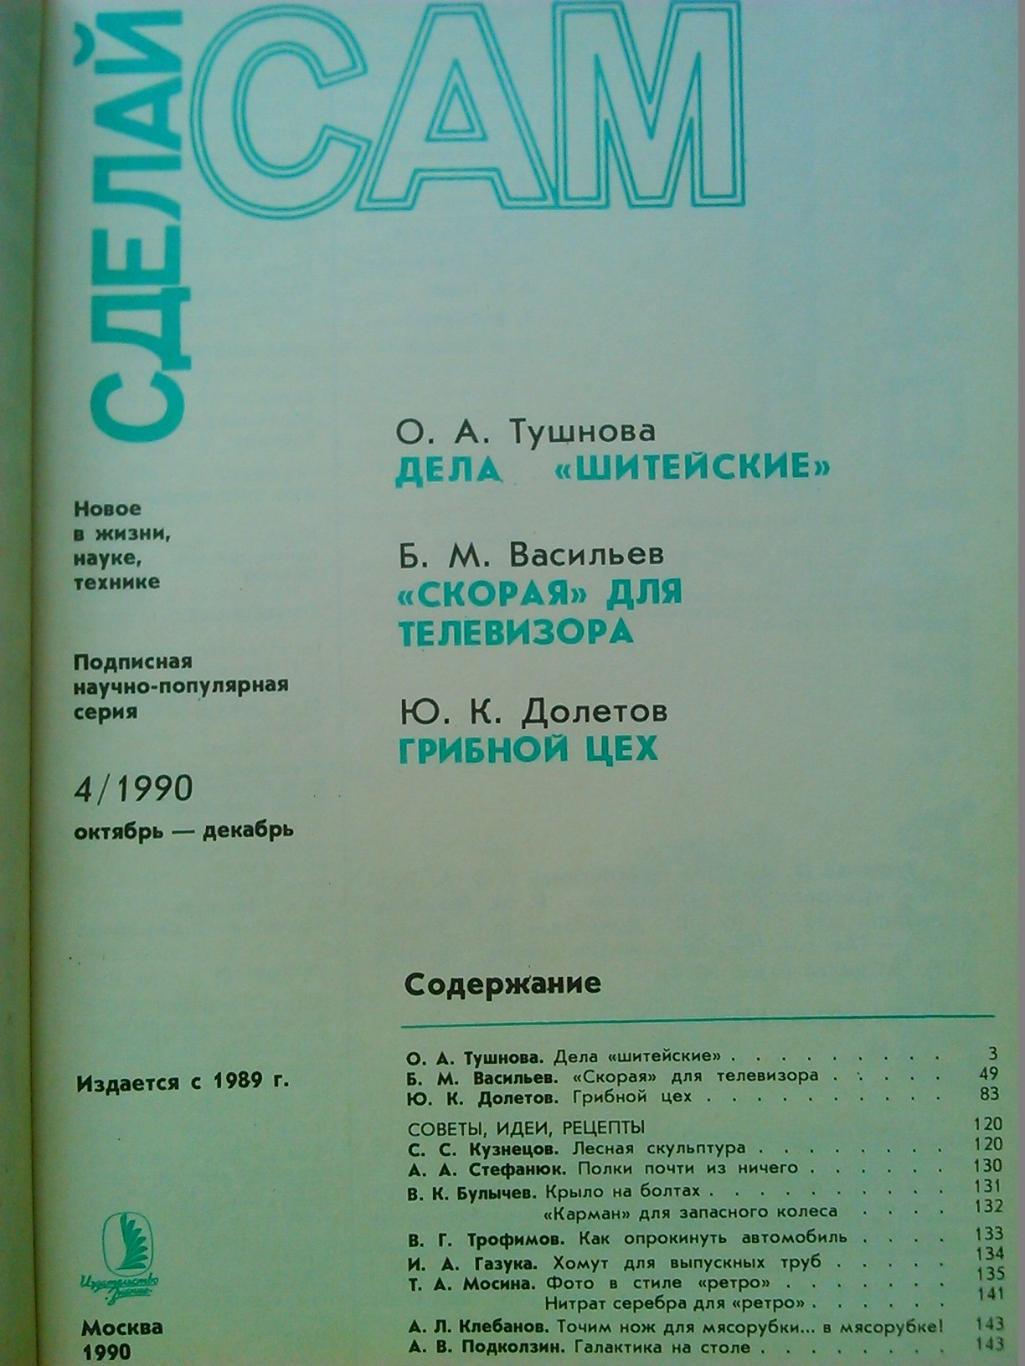 Журнал СДЕЛАЙ САМ №4.1990. Оптом скидки до 45%! 2